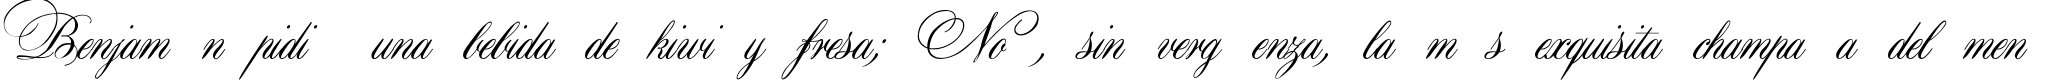 Пример написания шрифтом Aurora Script текста на испанском